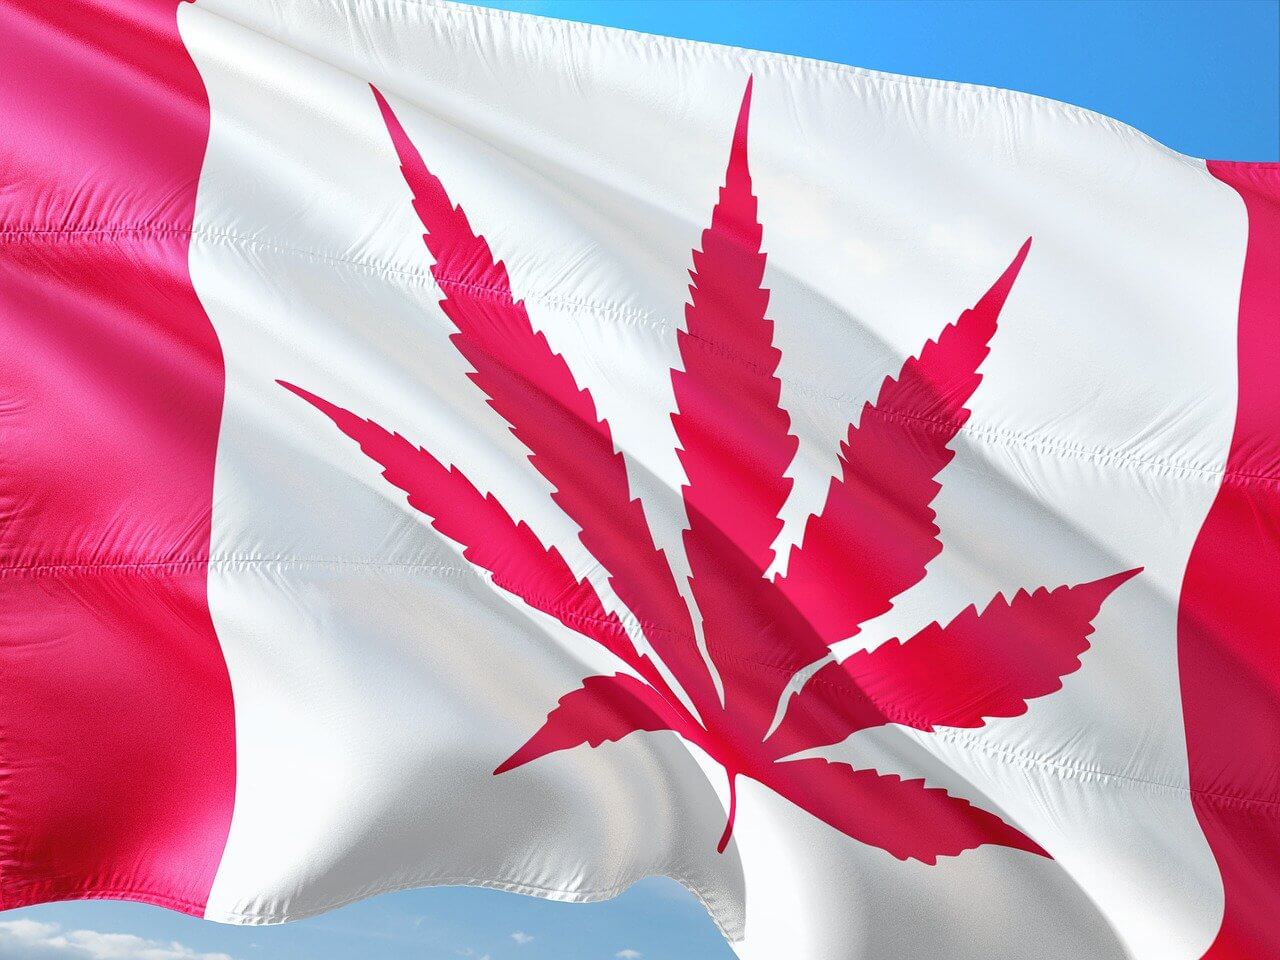 maconha legalizada no Canadá